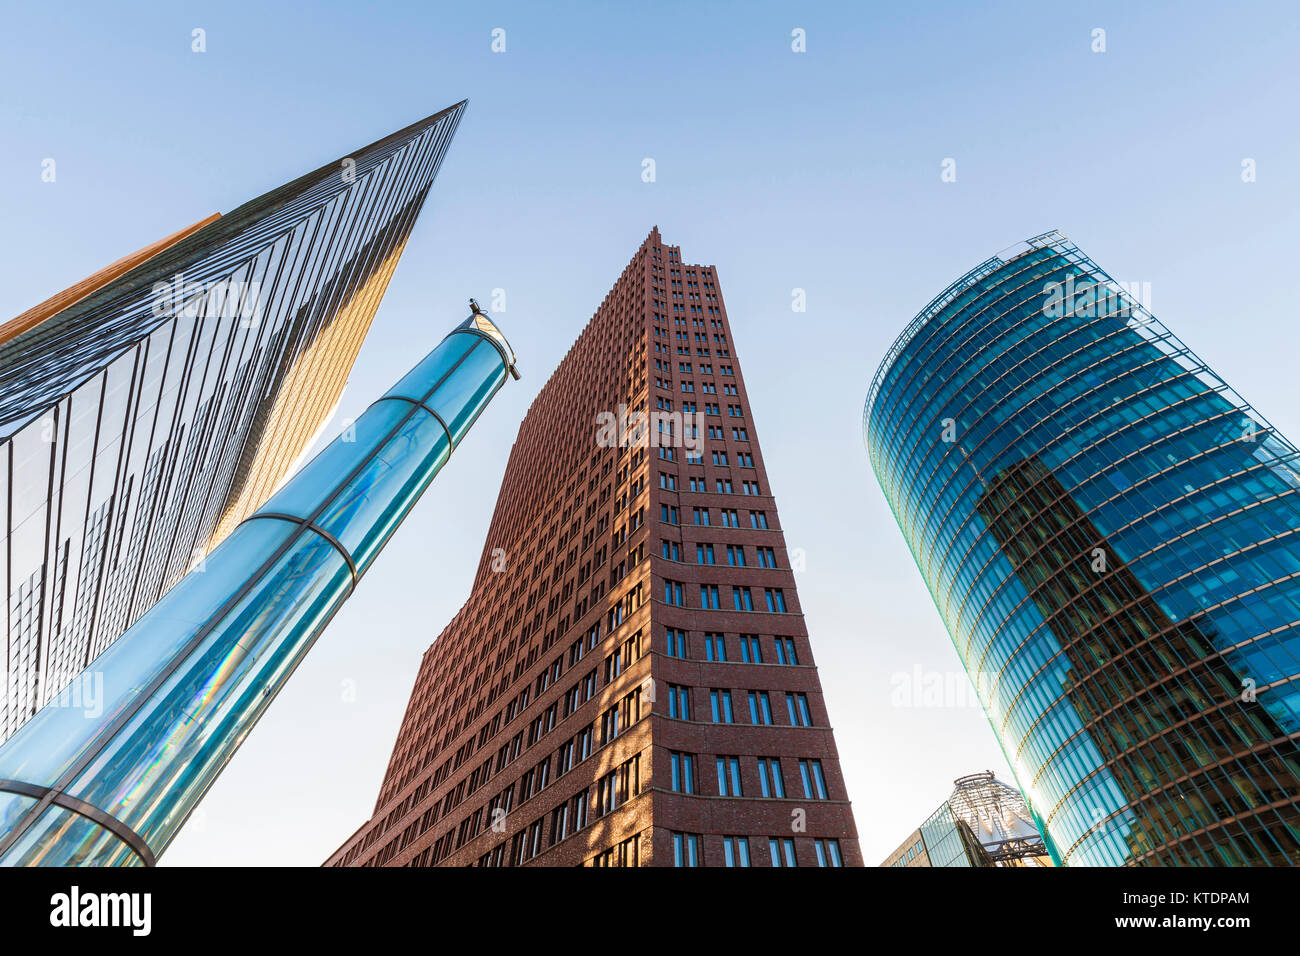 Deutschland, Berlin, Potsdamer Platz, Kollhoff-Tower, Bahntower, Hochhäuser Stock Photo